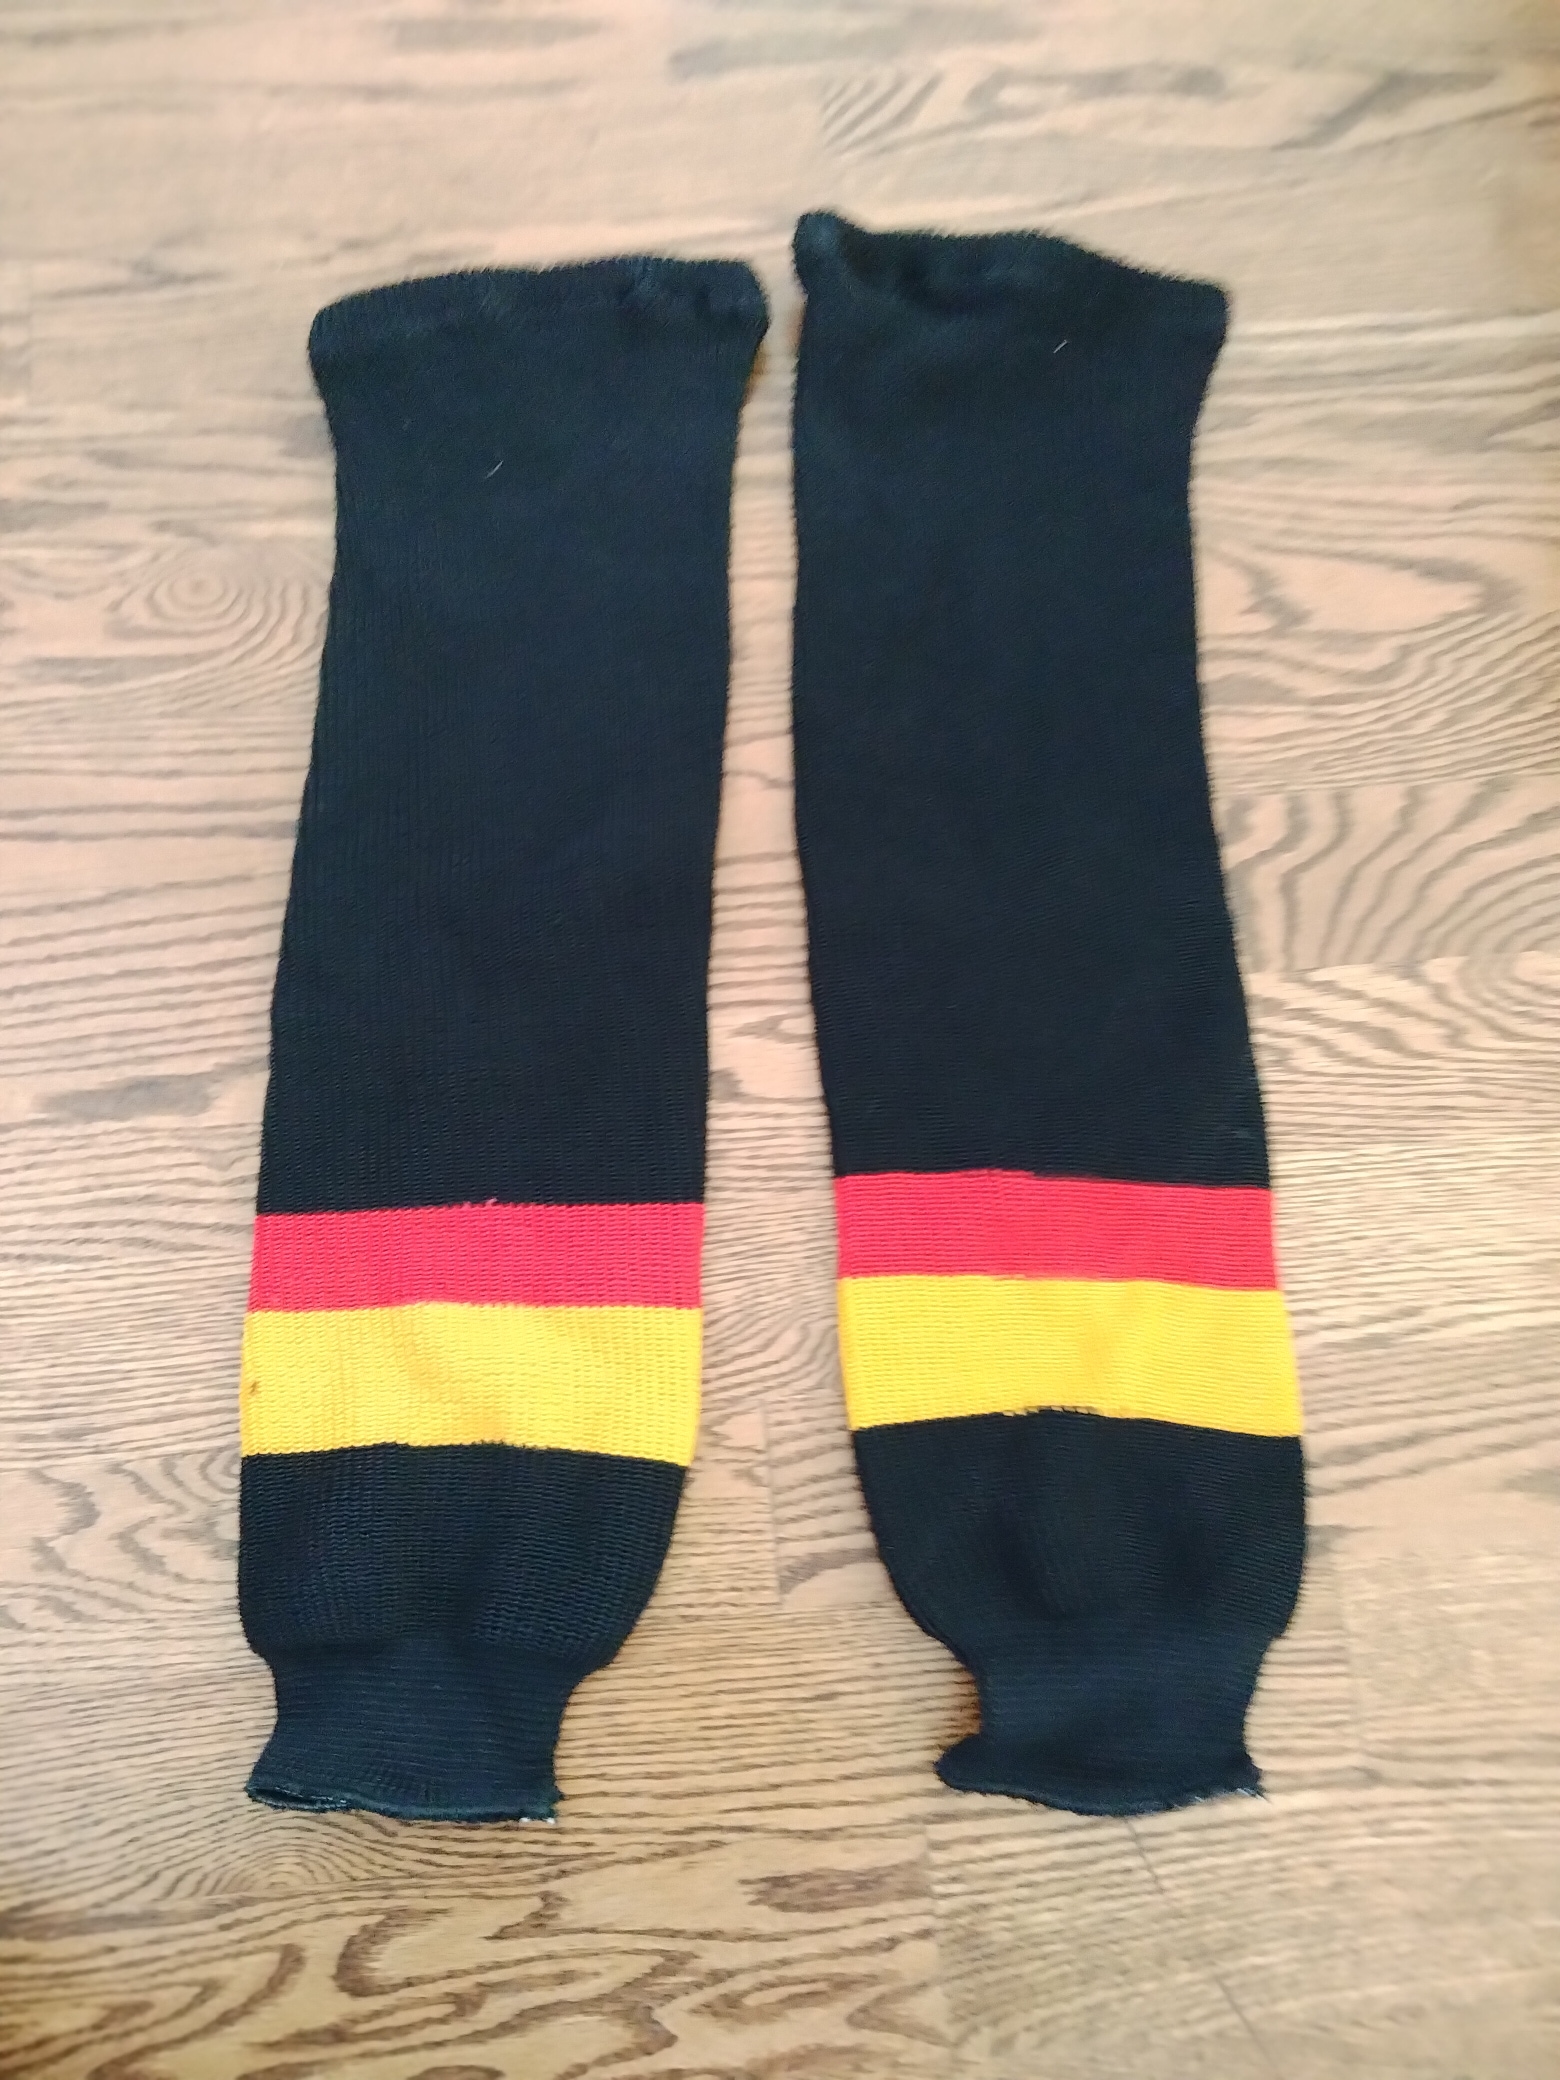 Black Senior Large Athletic Knit Socks